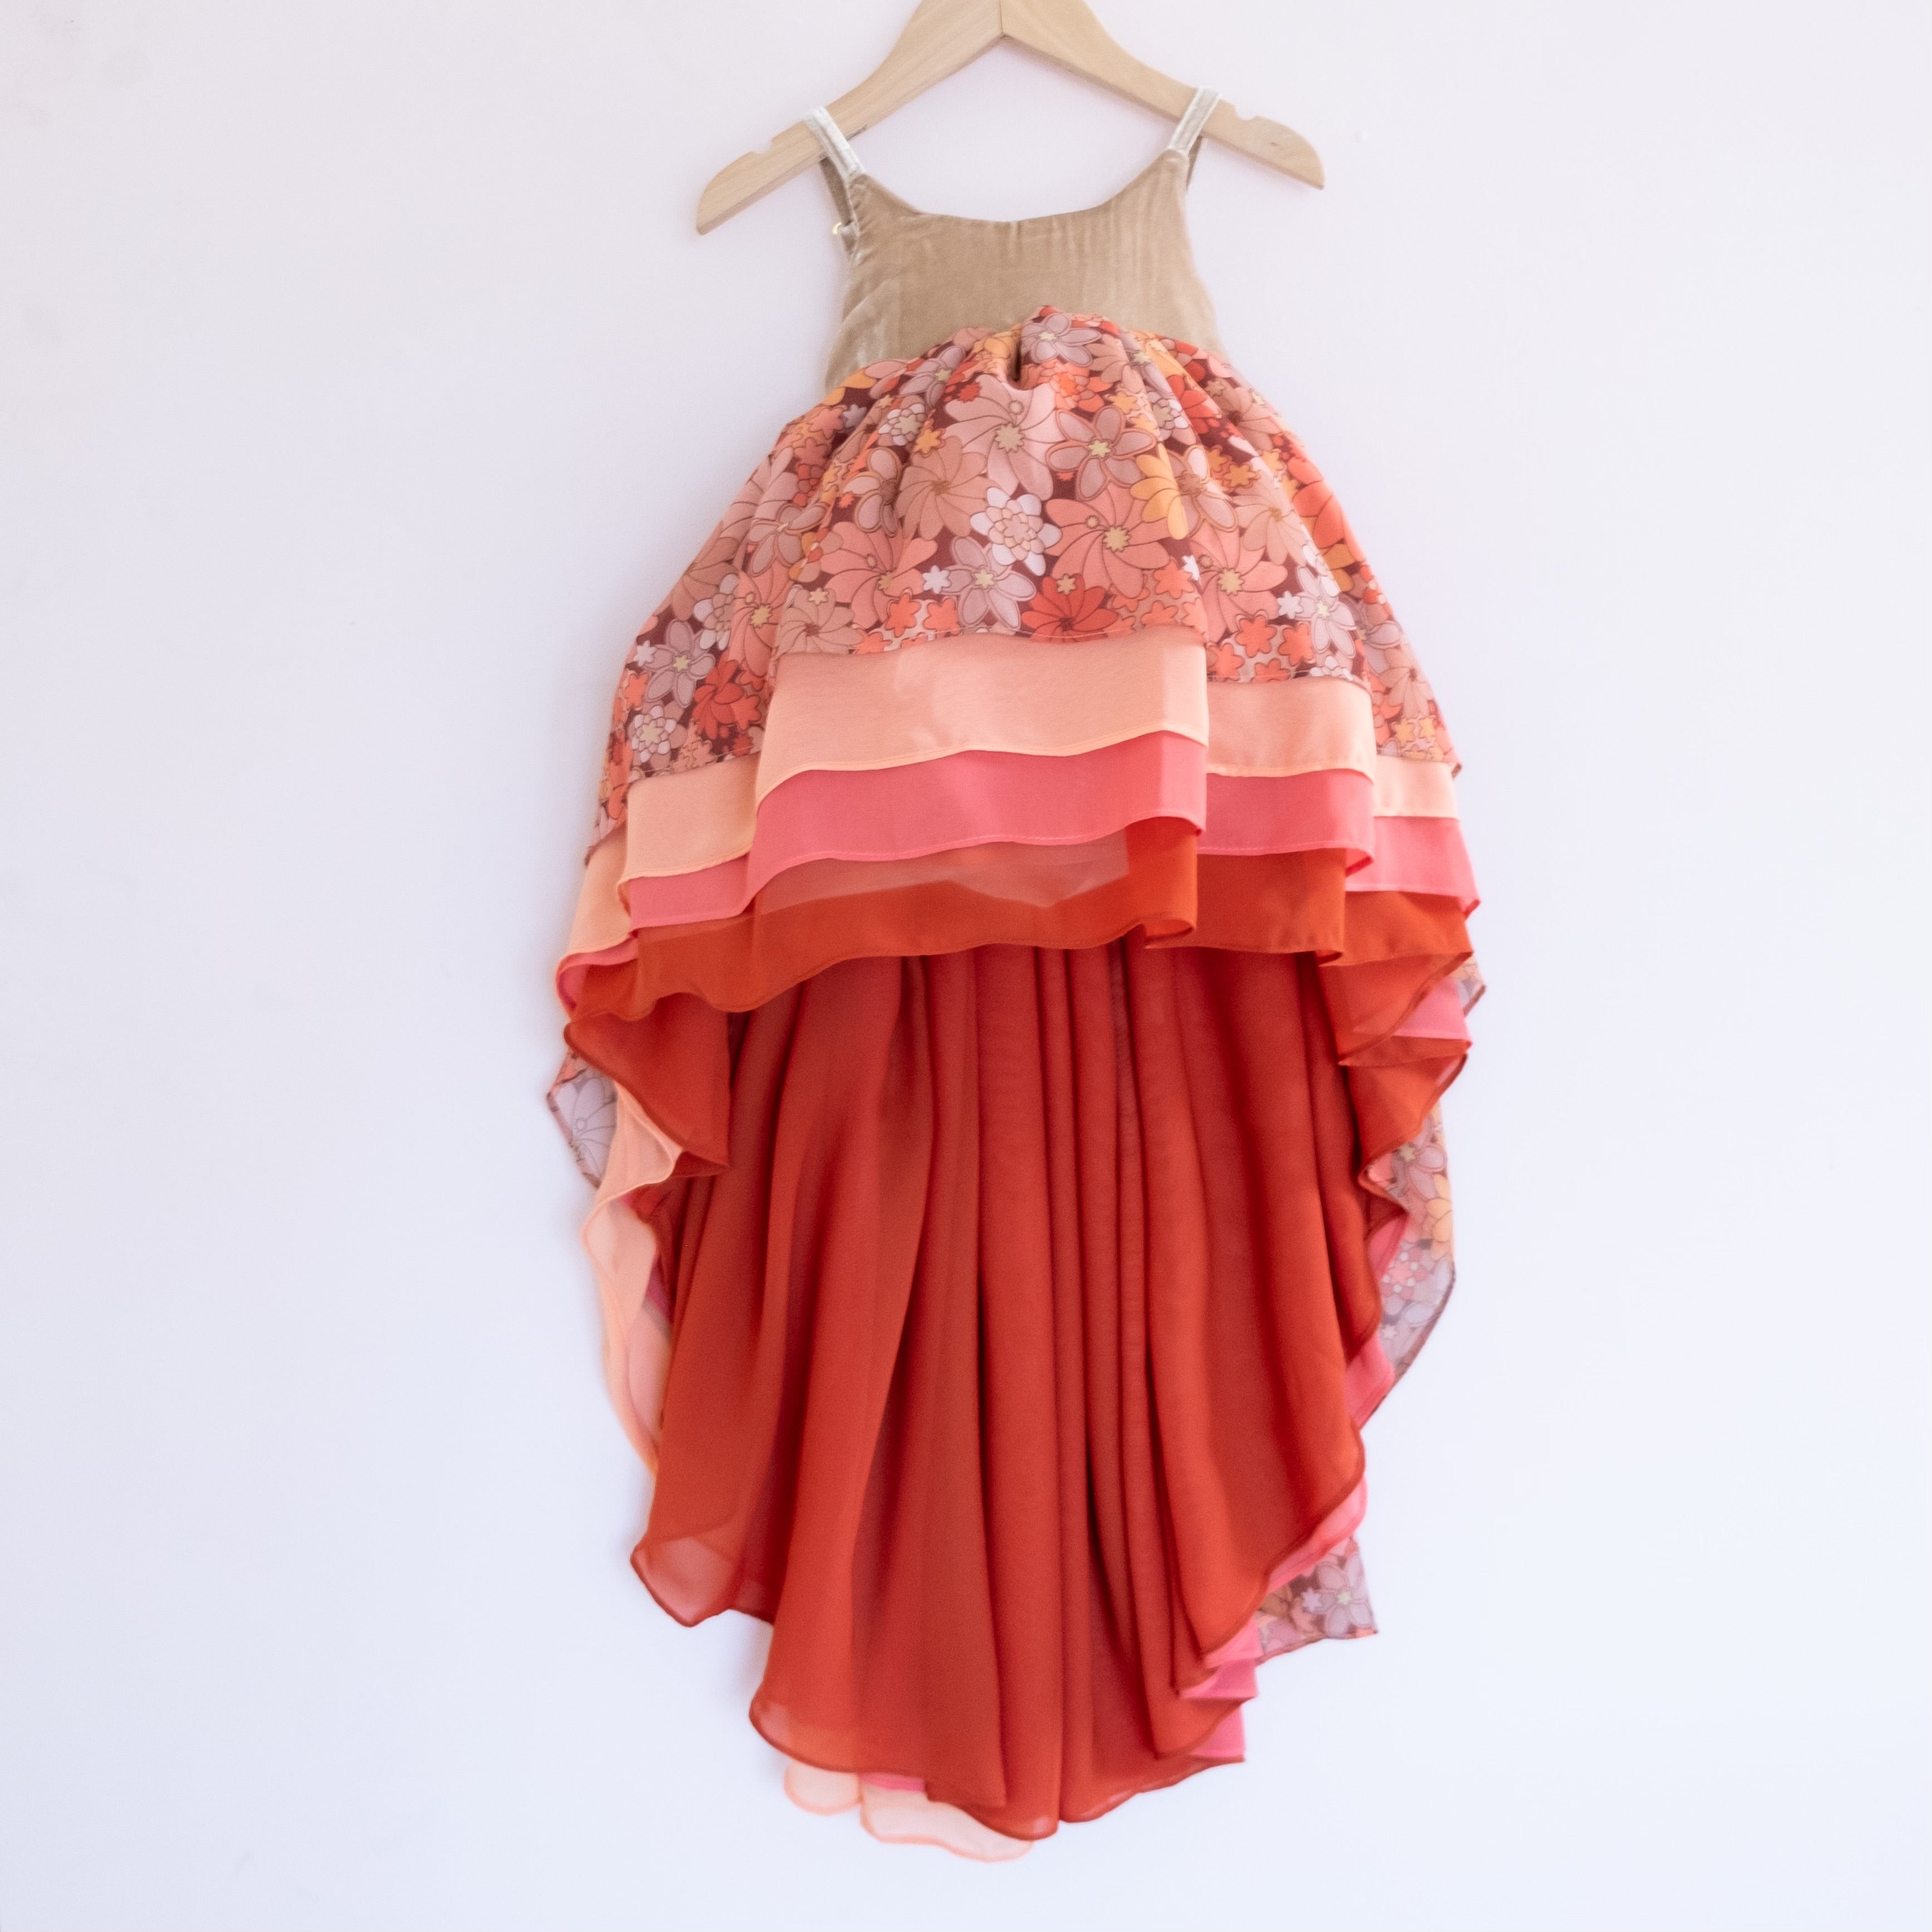 ASOS DESIGN soft chiffon mini dress with floral embellishment | ASOS